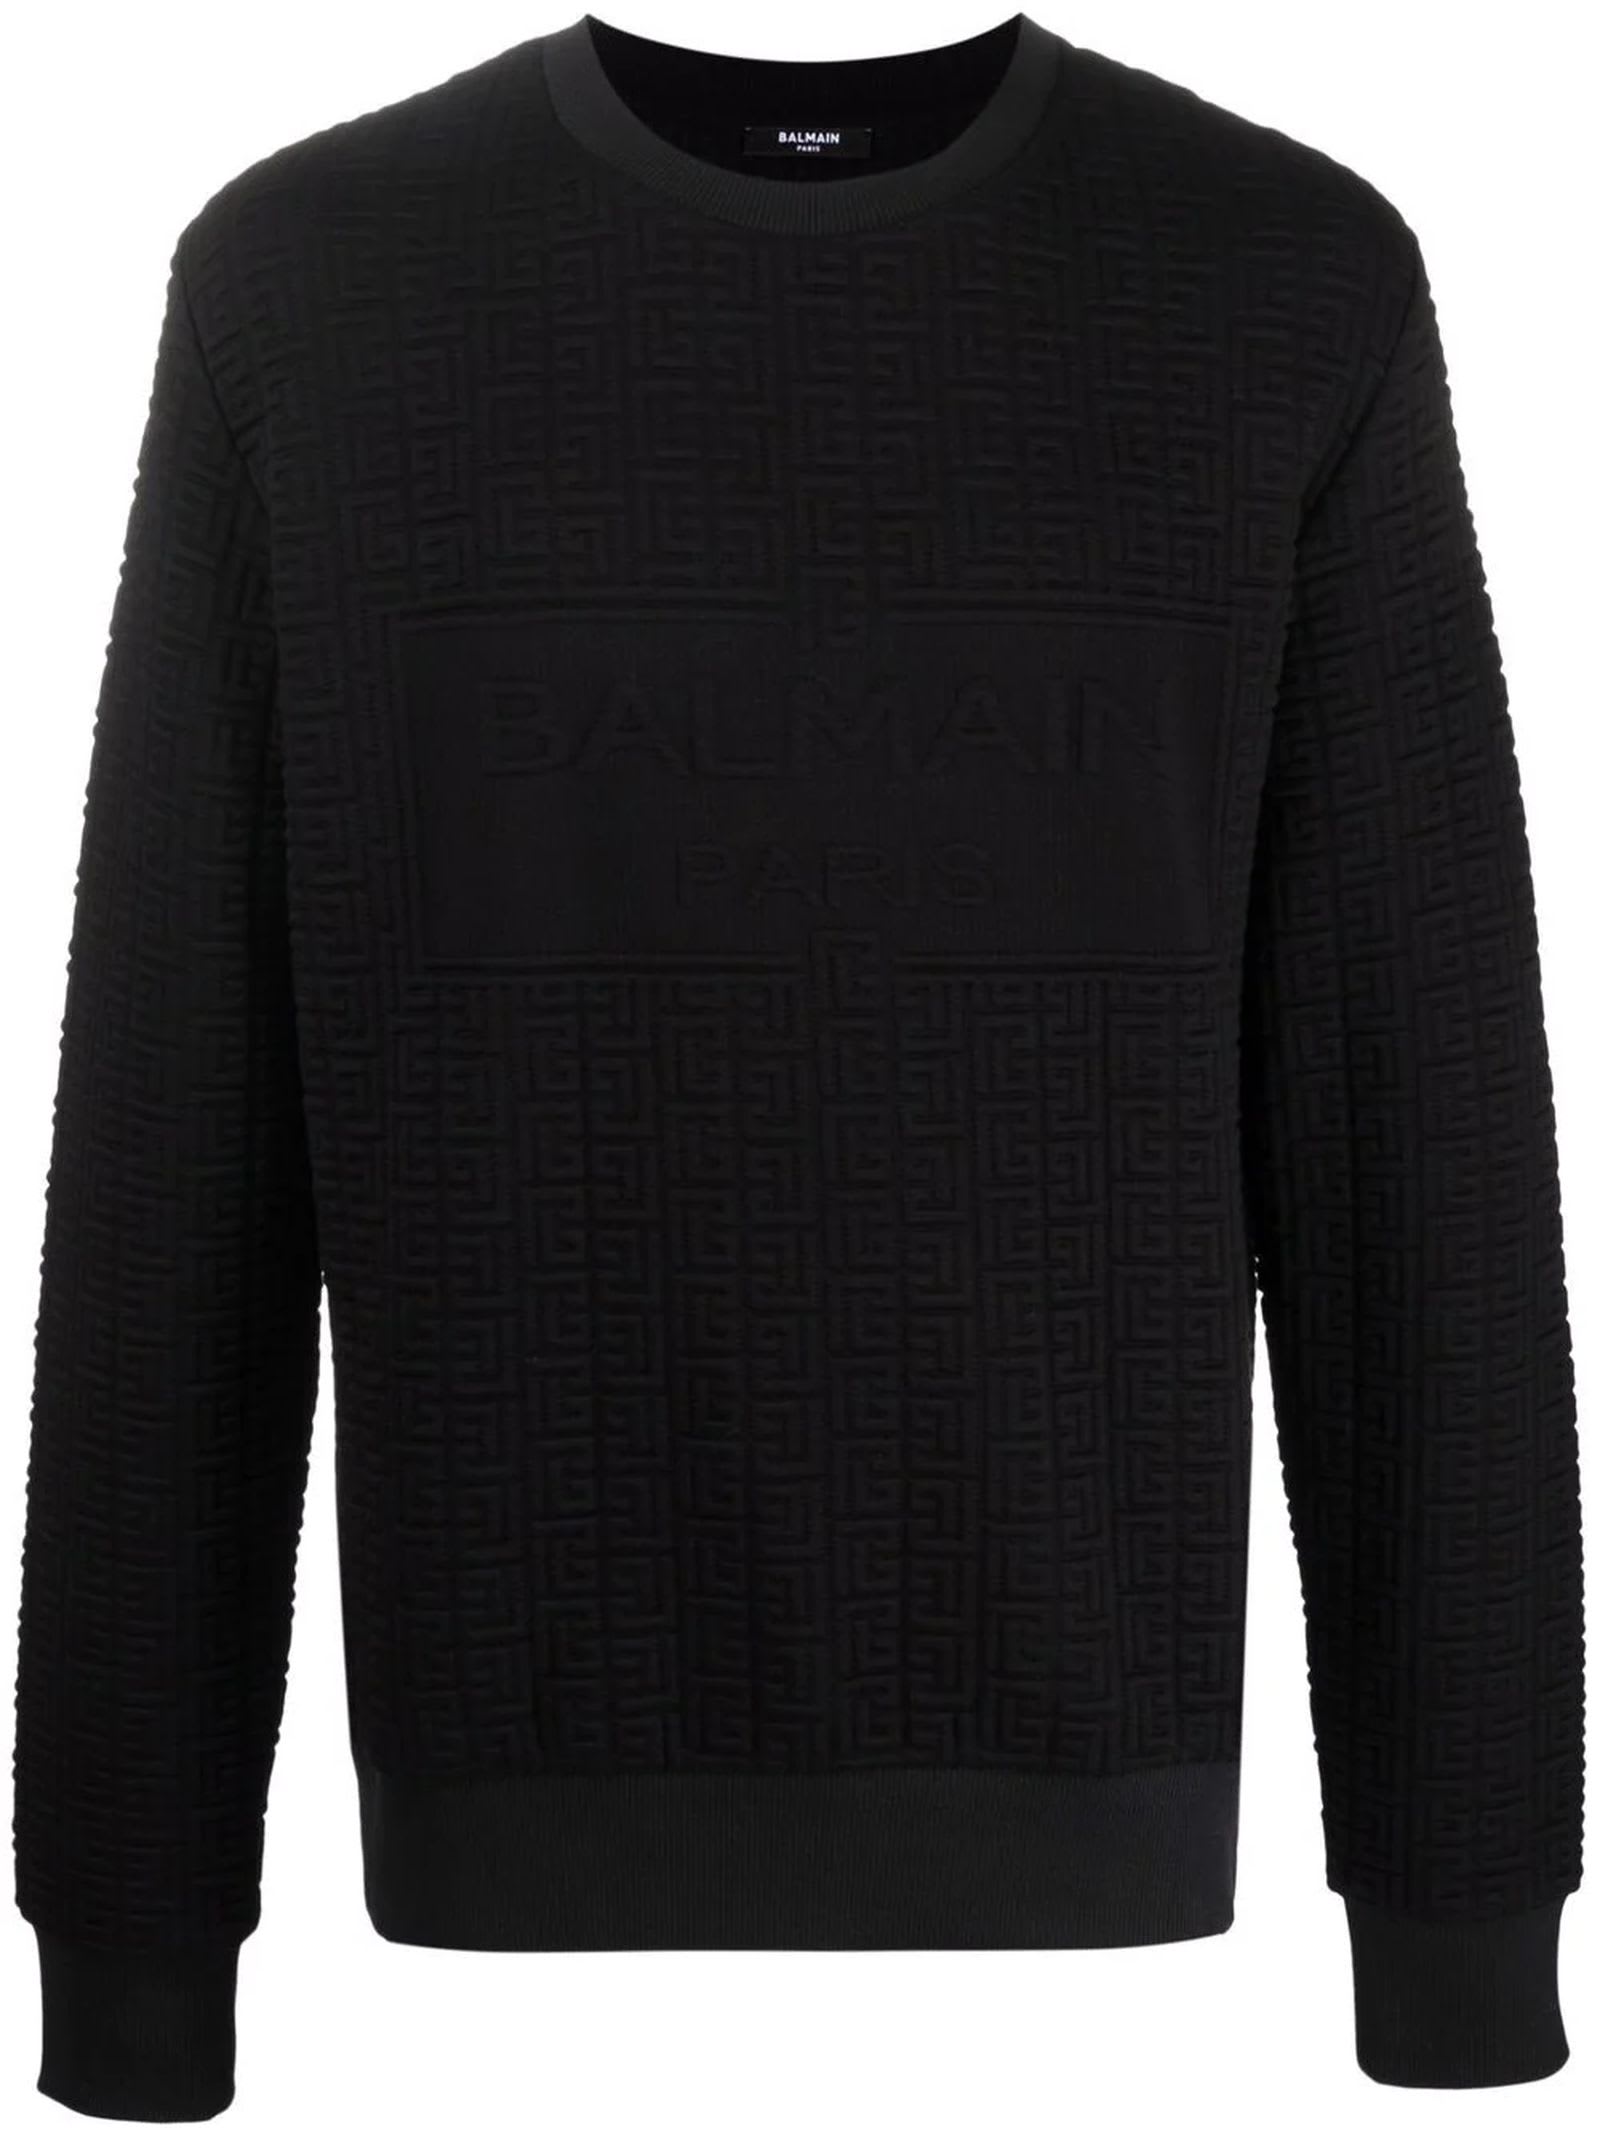 Balmain Black Jersey Sweatshirt